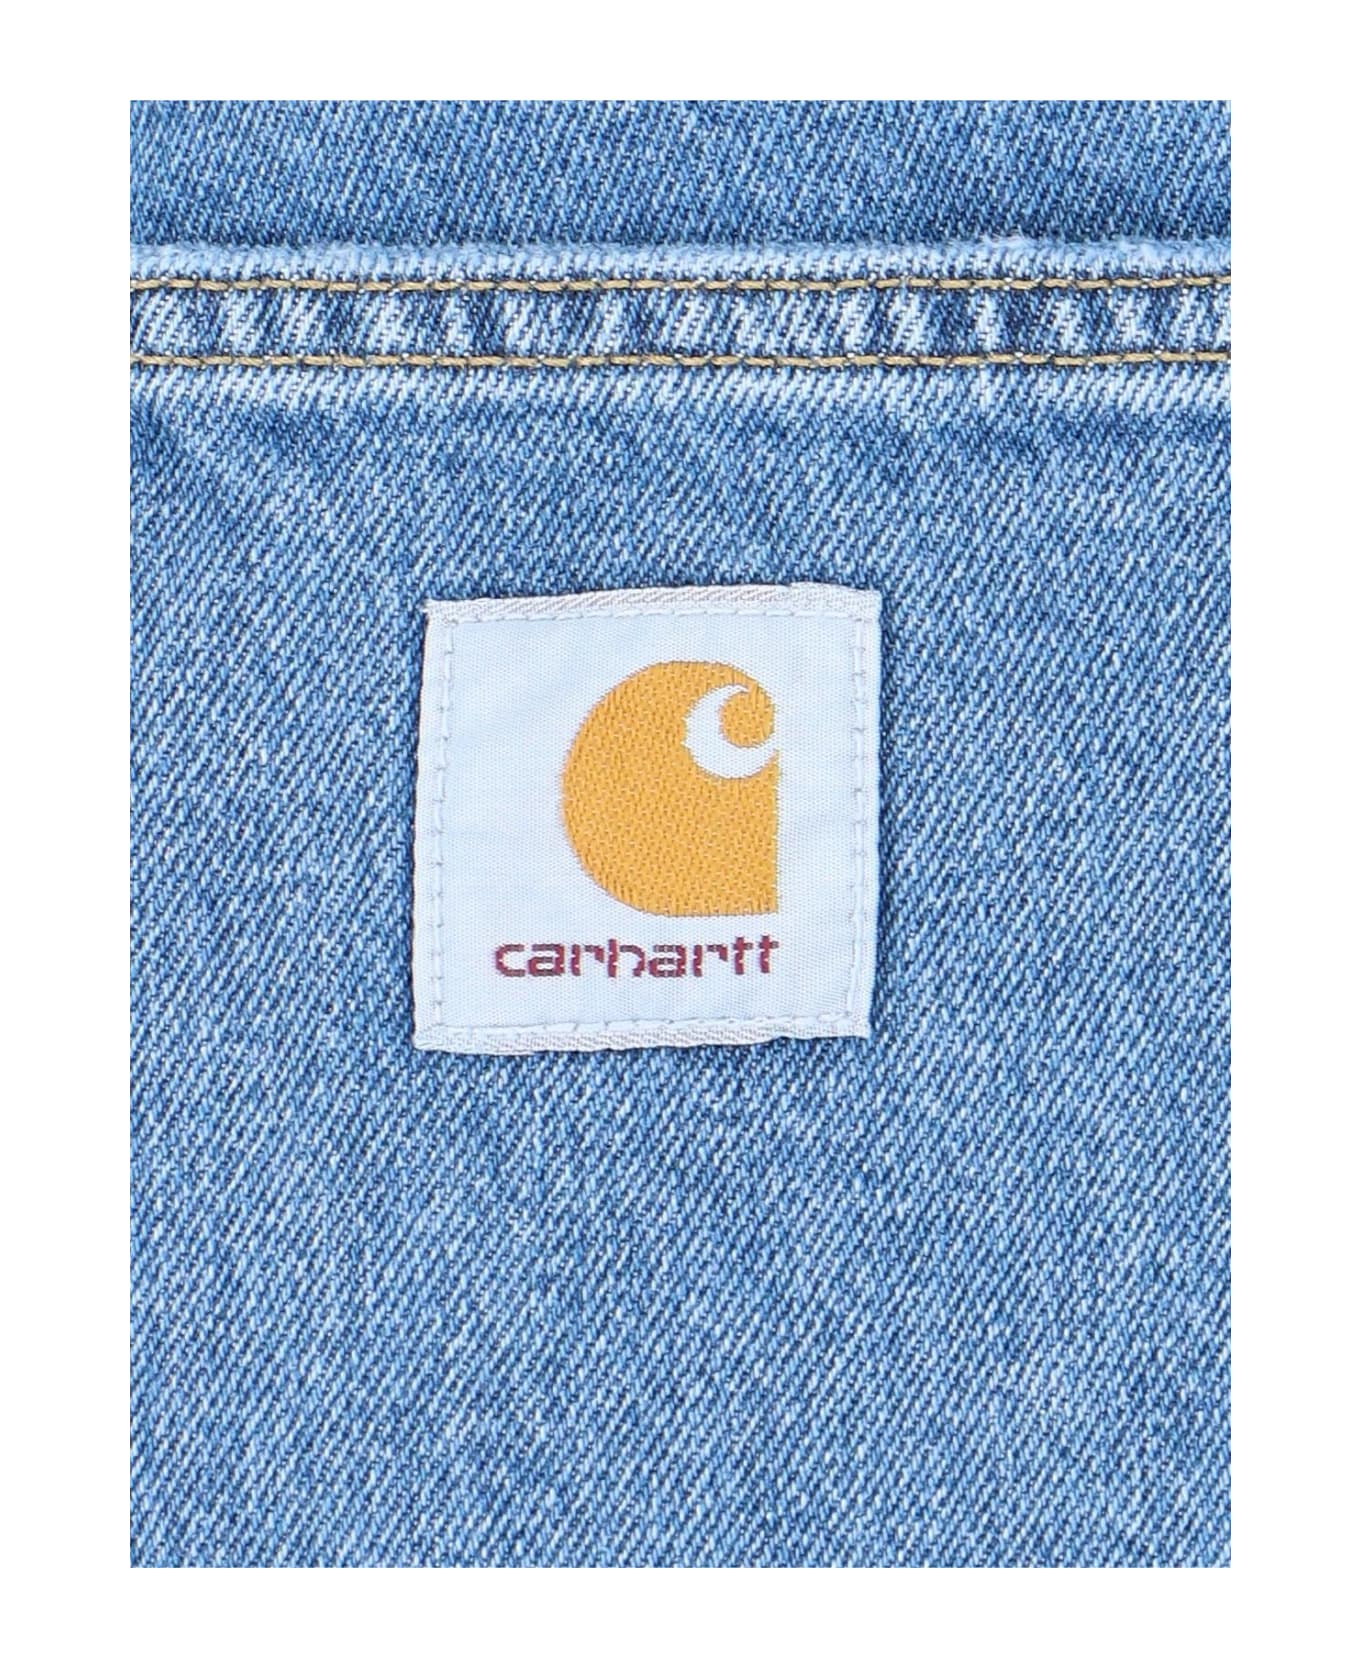 Carhartt Landon Jeans - Denim デニム